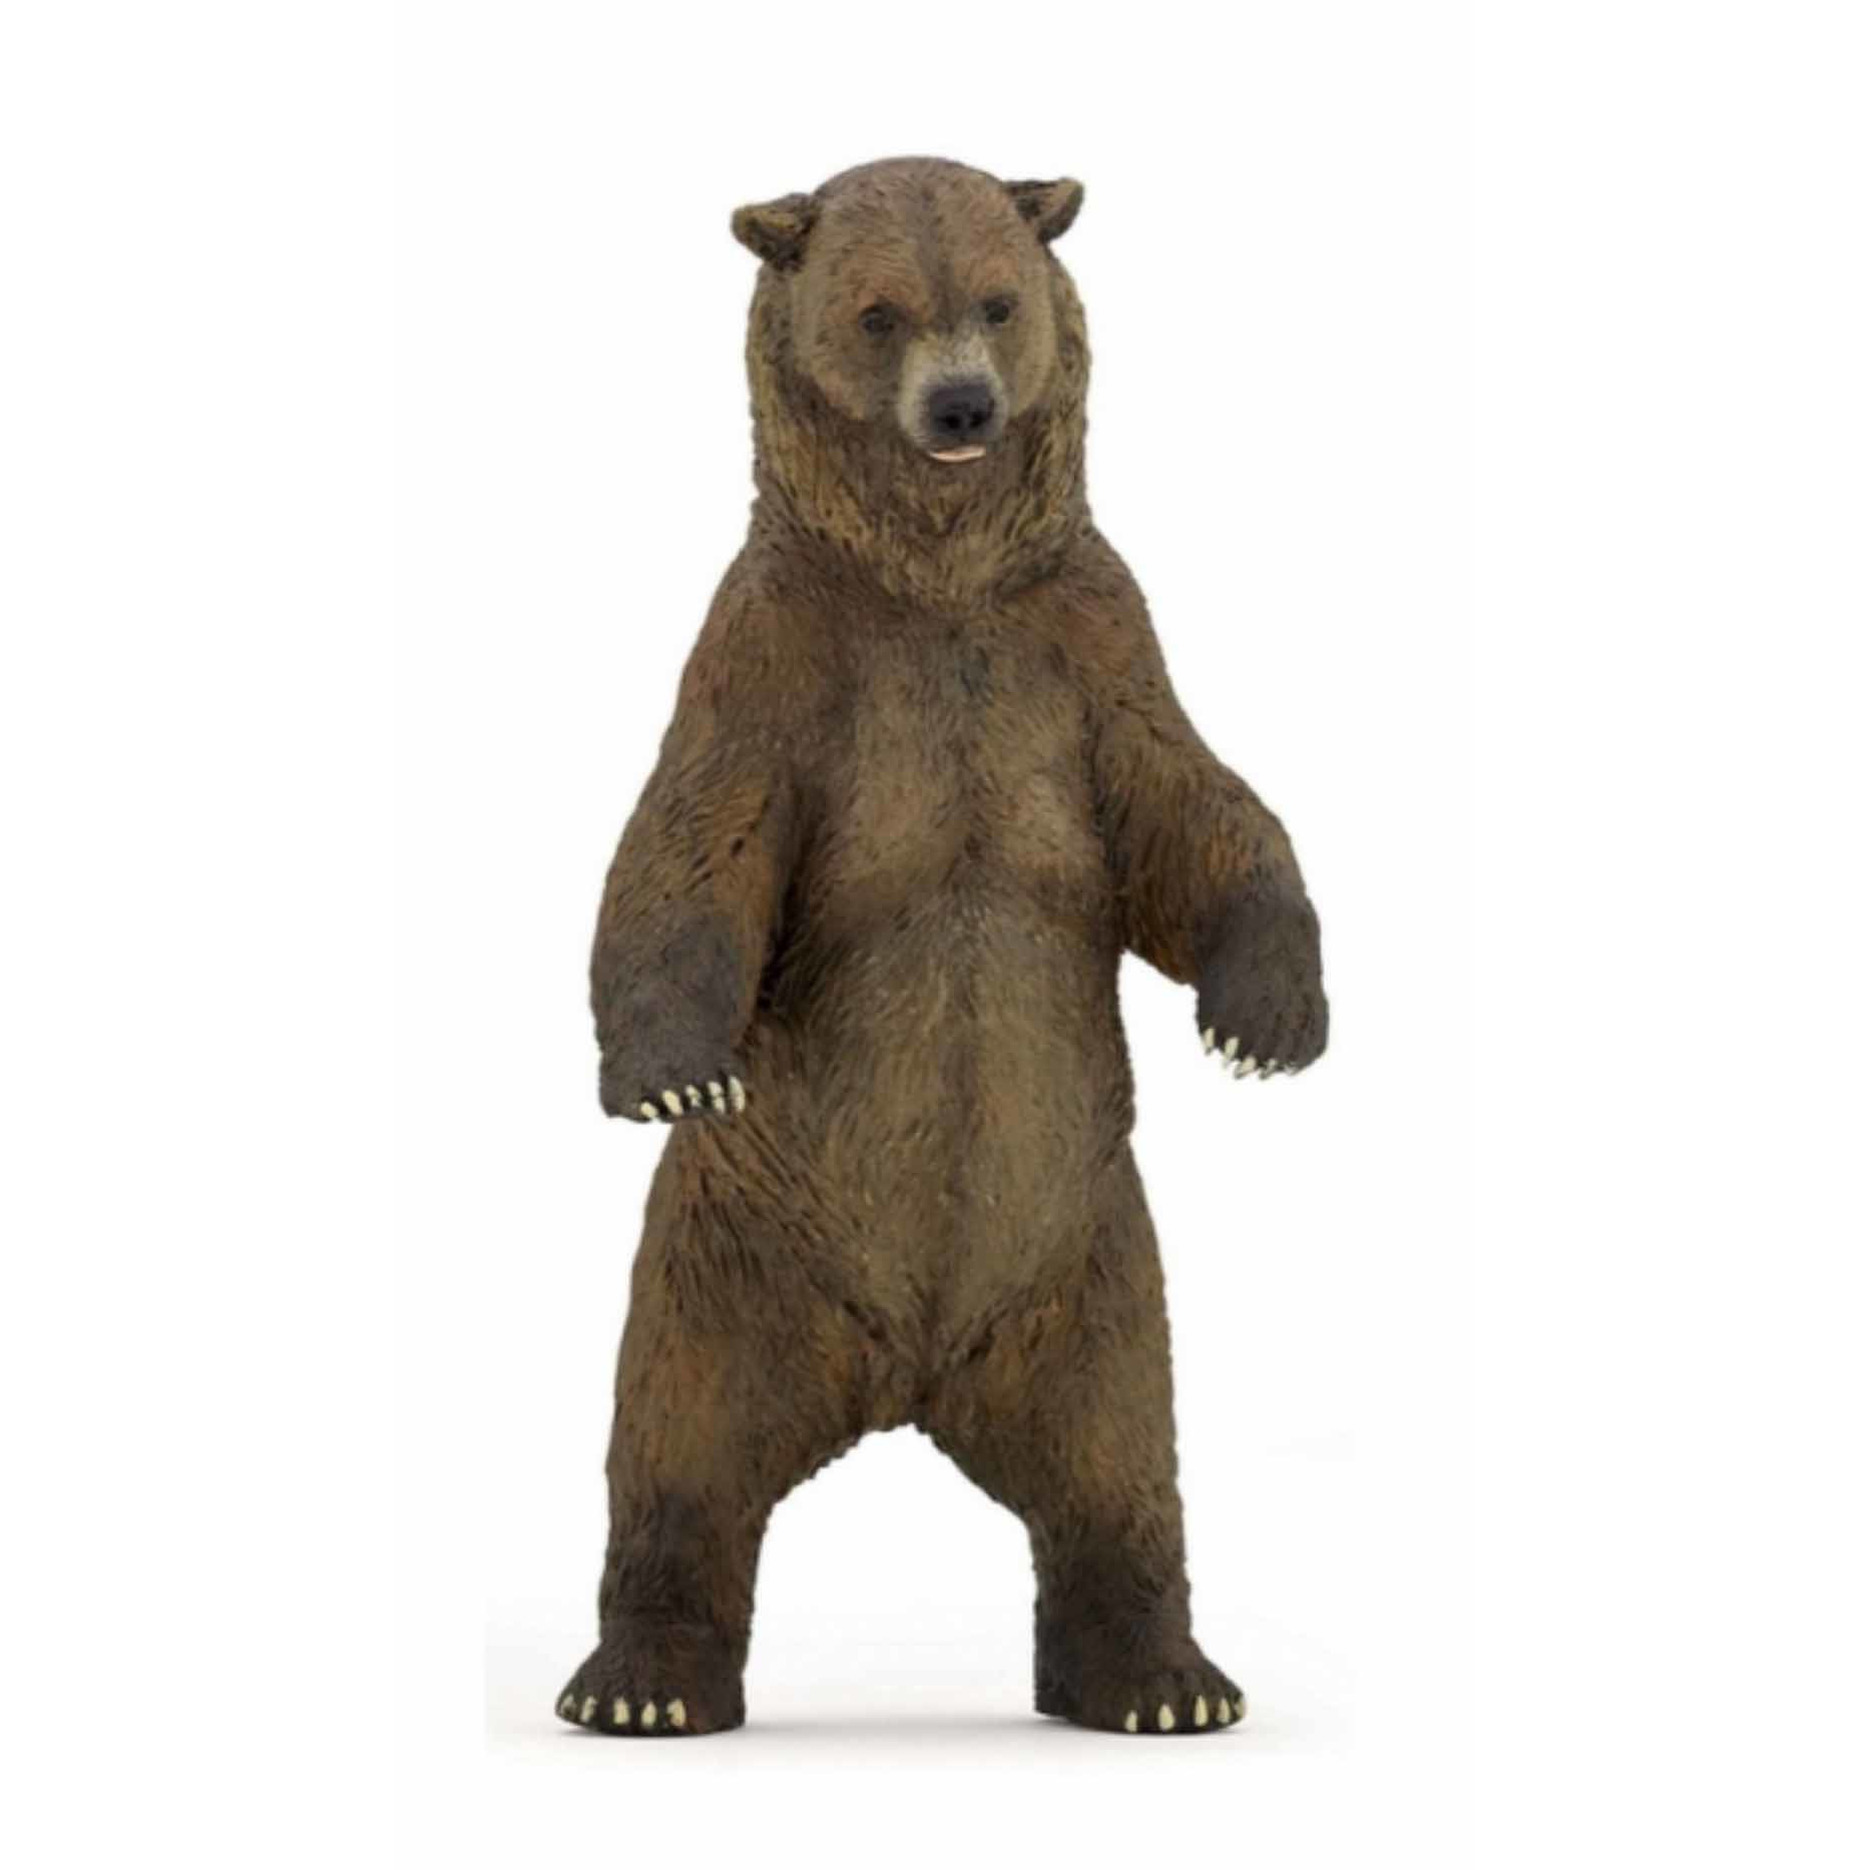 Plastic speelgoed figuur grizzly beer 12 cm